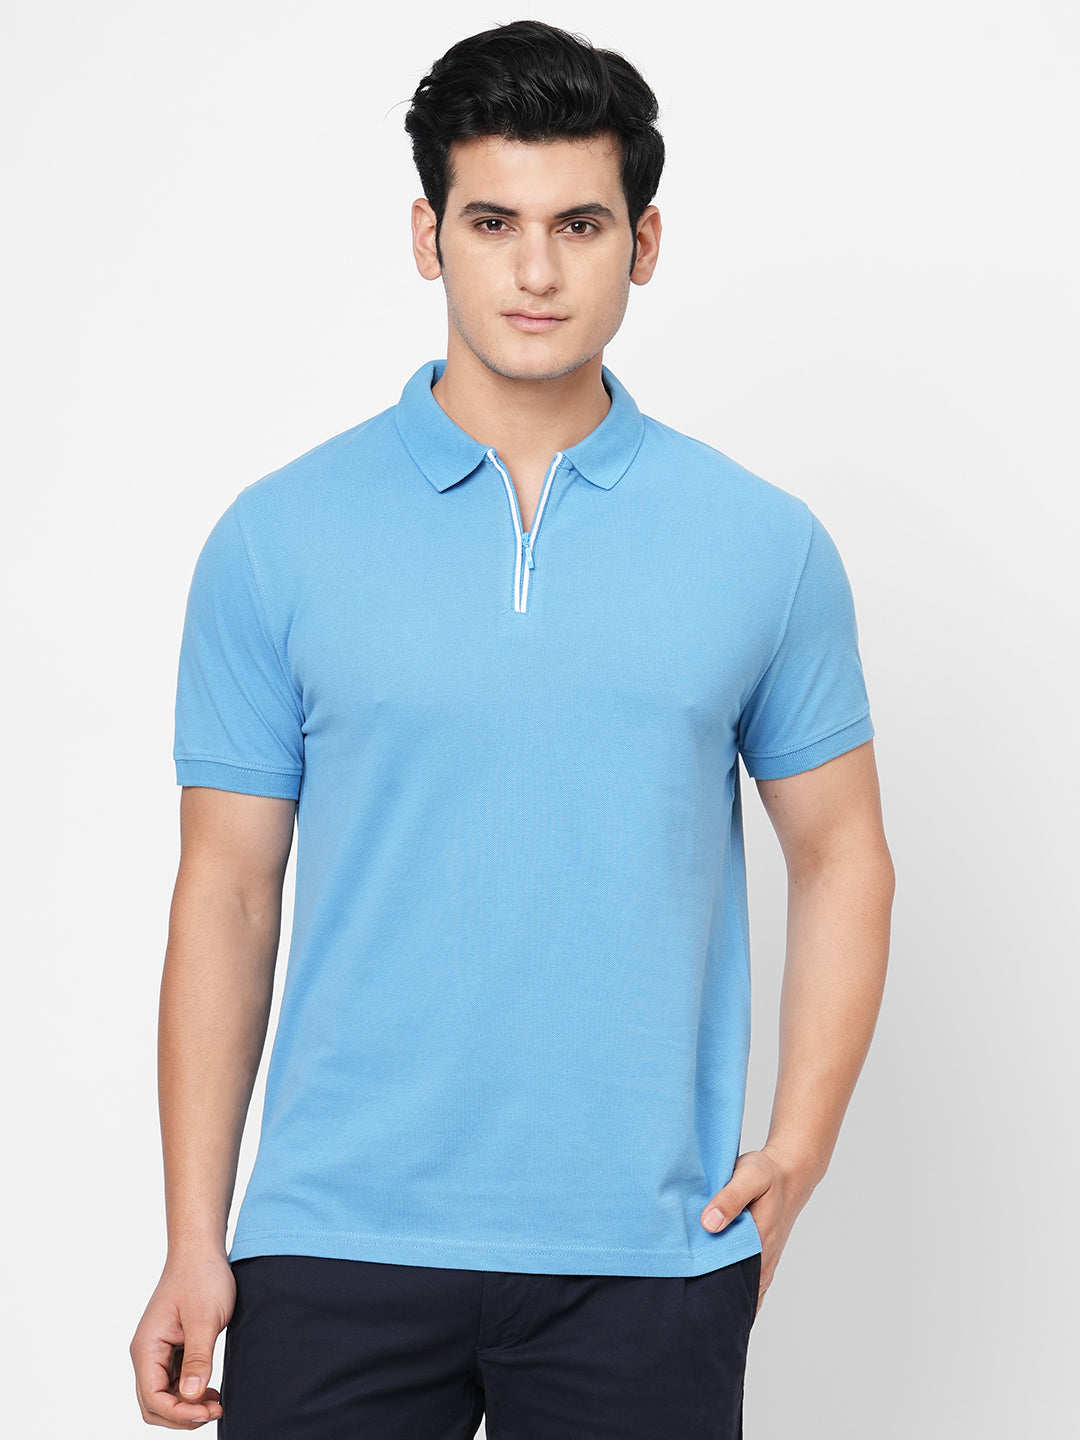 Men's Cotton Blue Regular Fit Tshirt